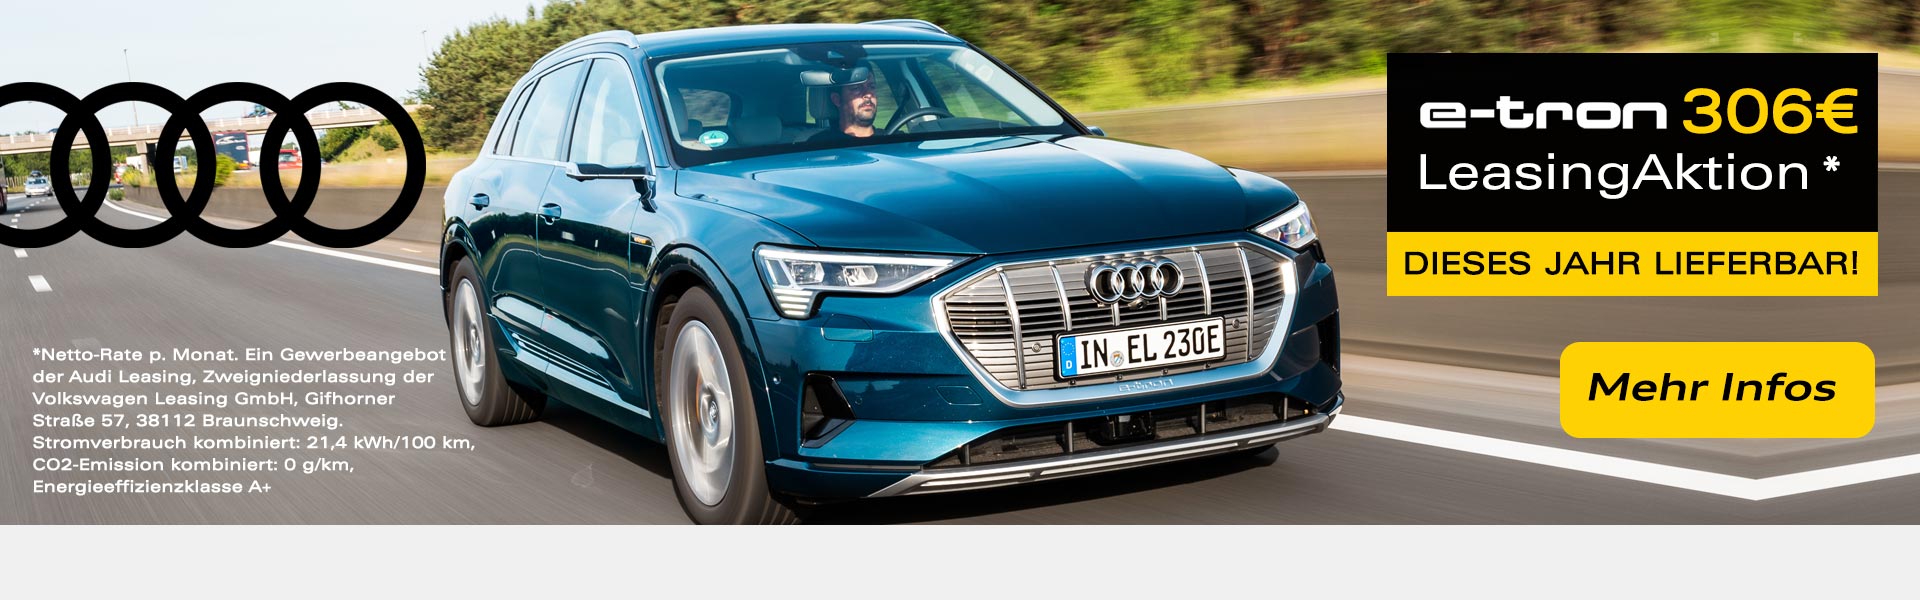 Audi e-tron Gewerbeleasing Angebot